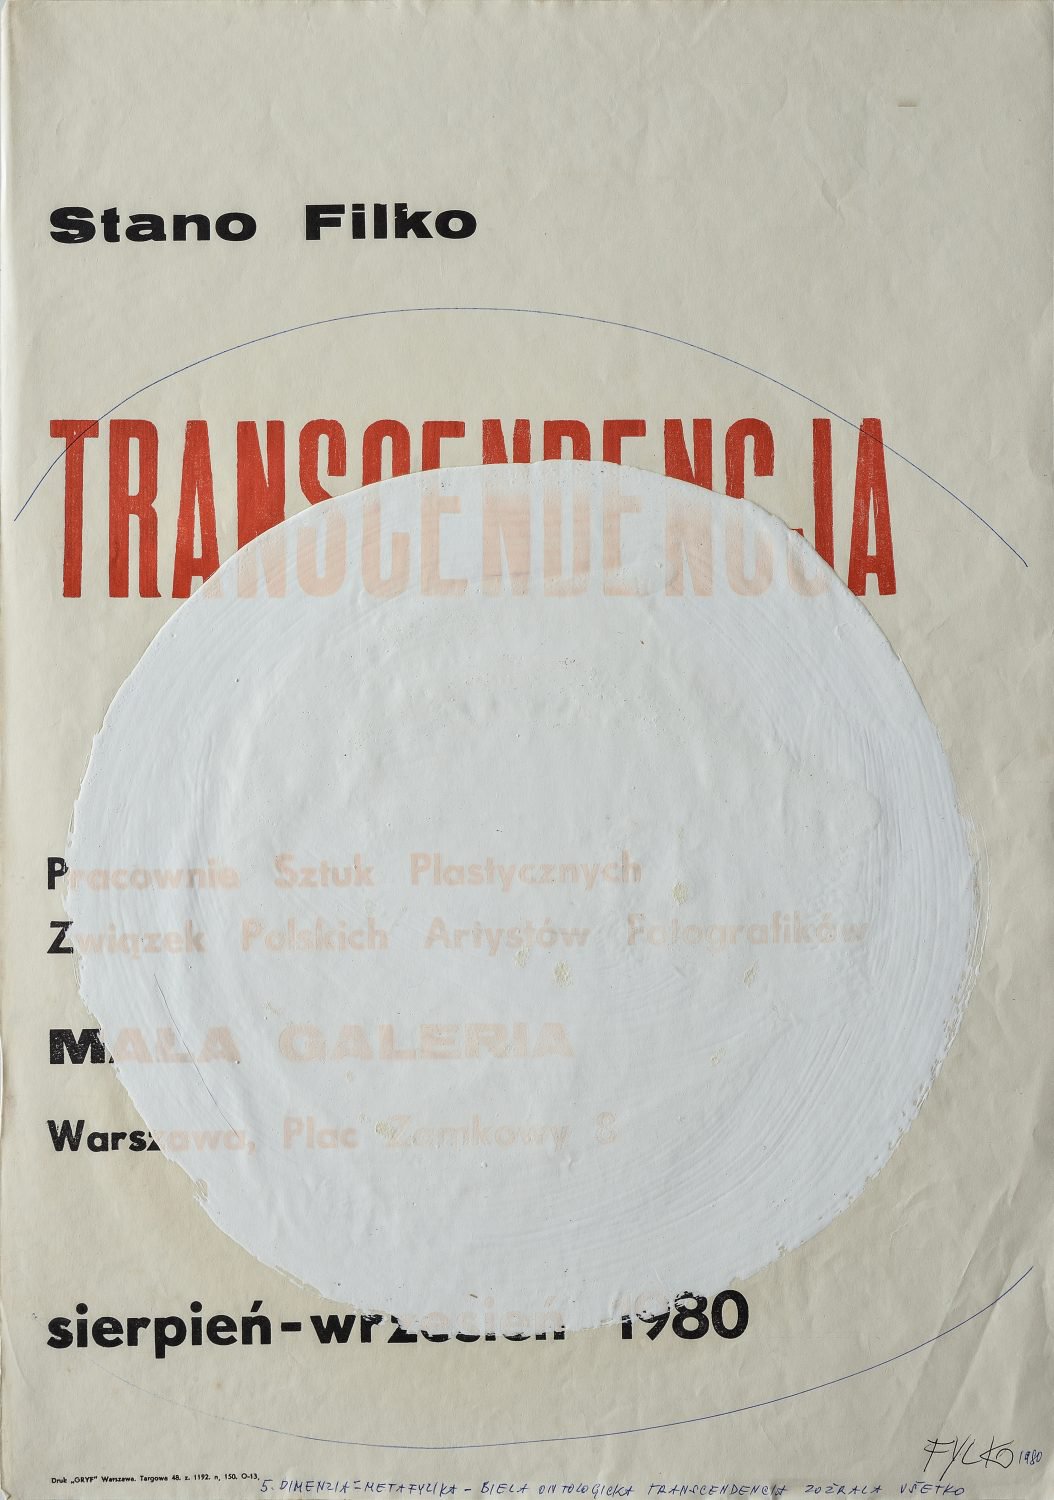 Stano Filko5th Dimension White Ontologic Transcendence - Devoured Everything, 1980-1995Latex paint, pen, offset print on paper60 x 42 cm